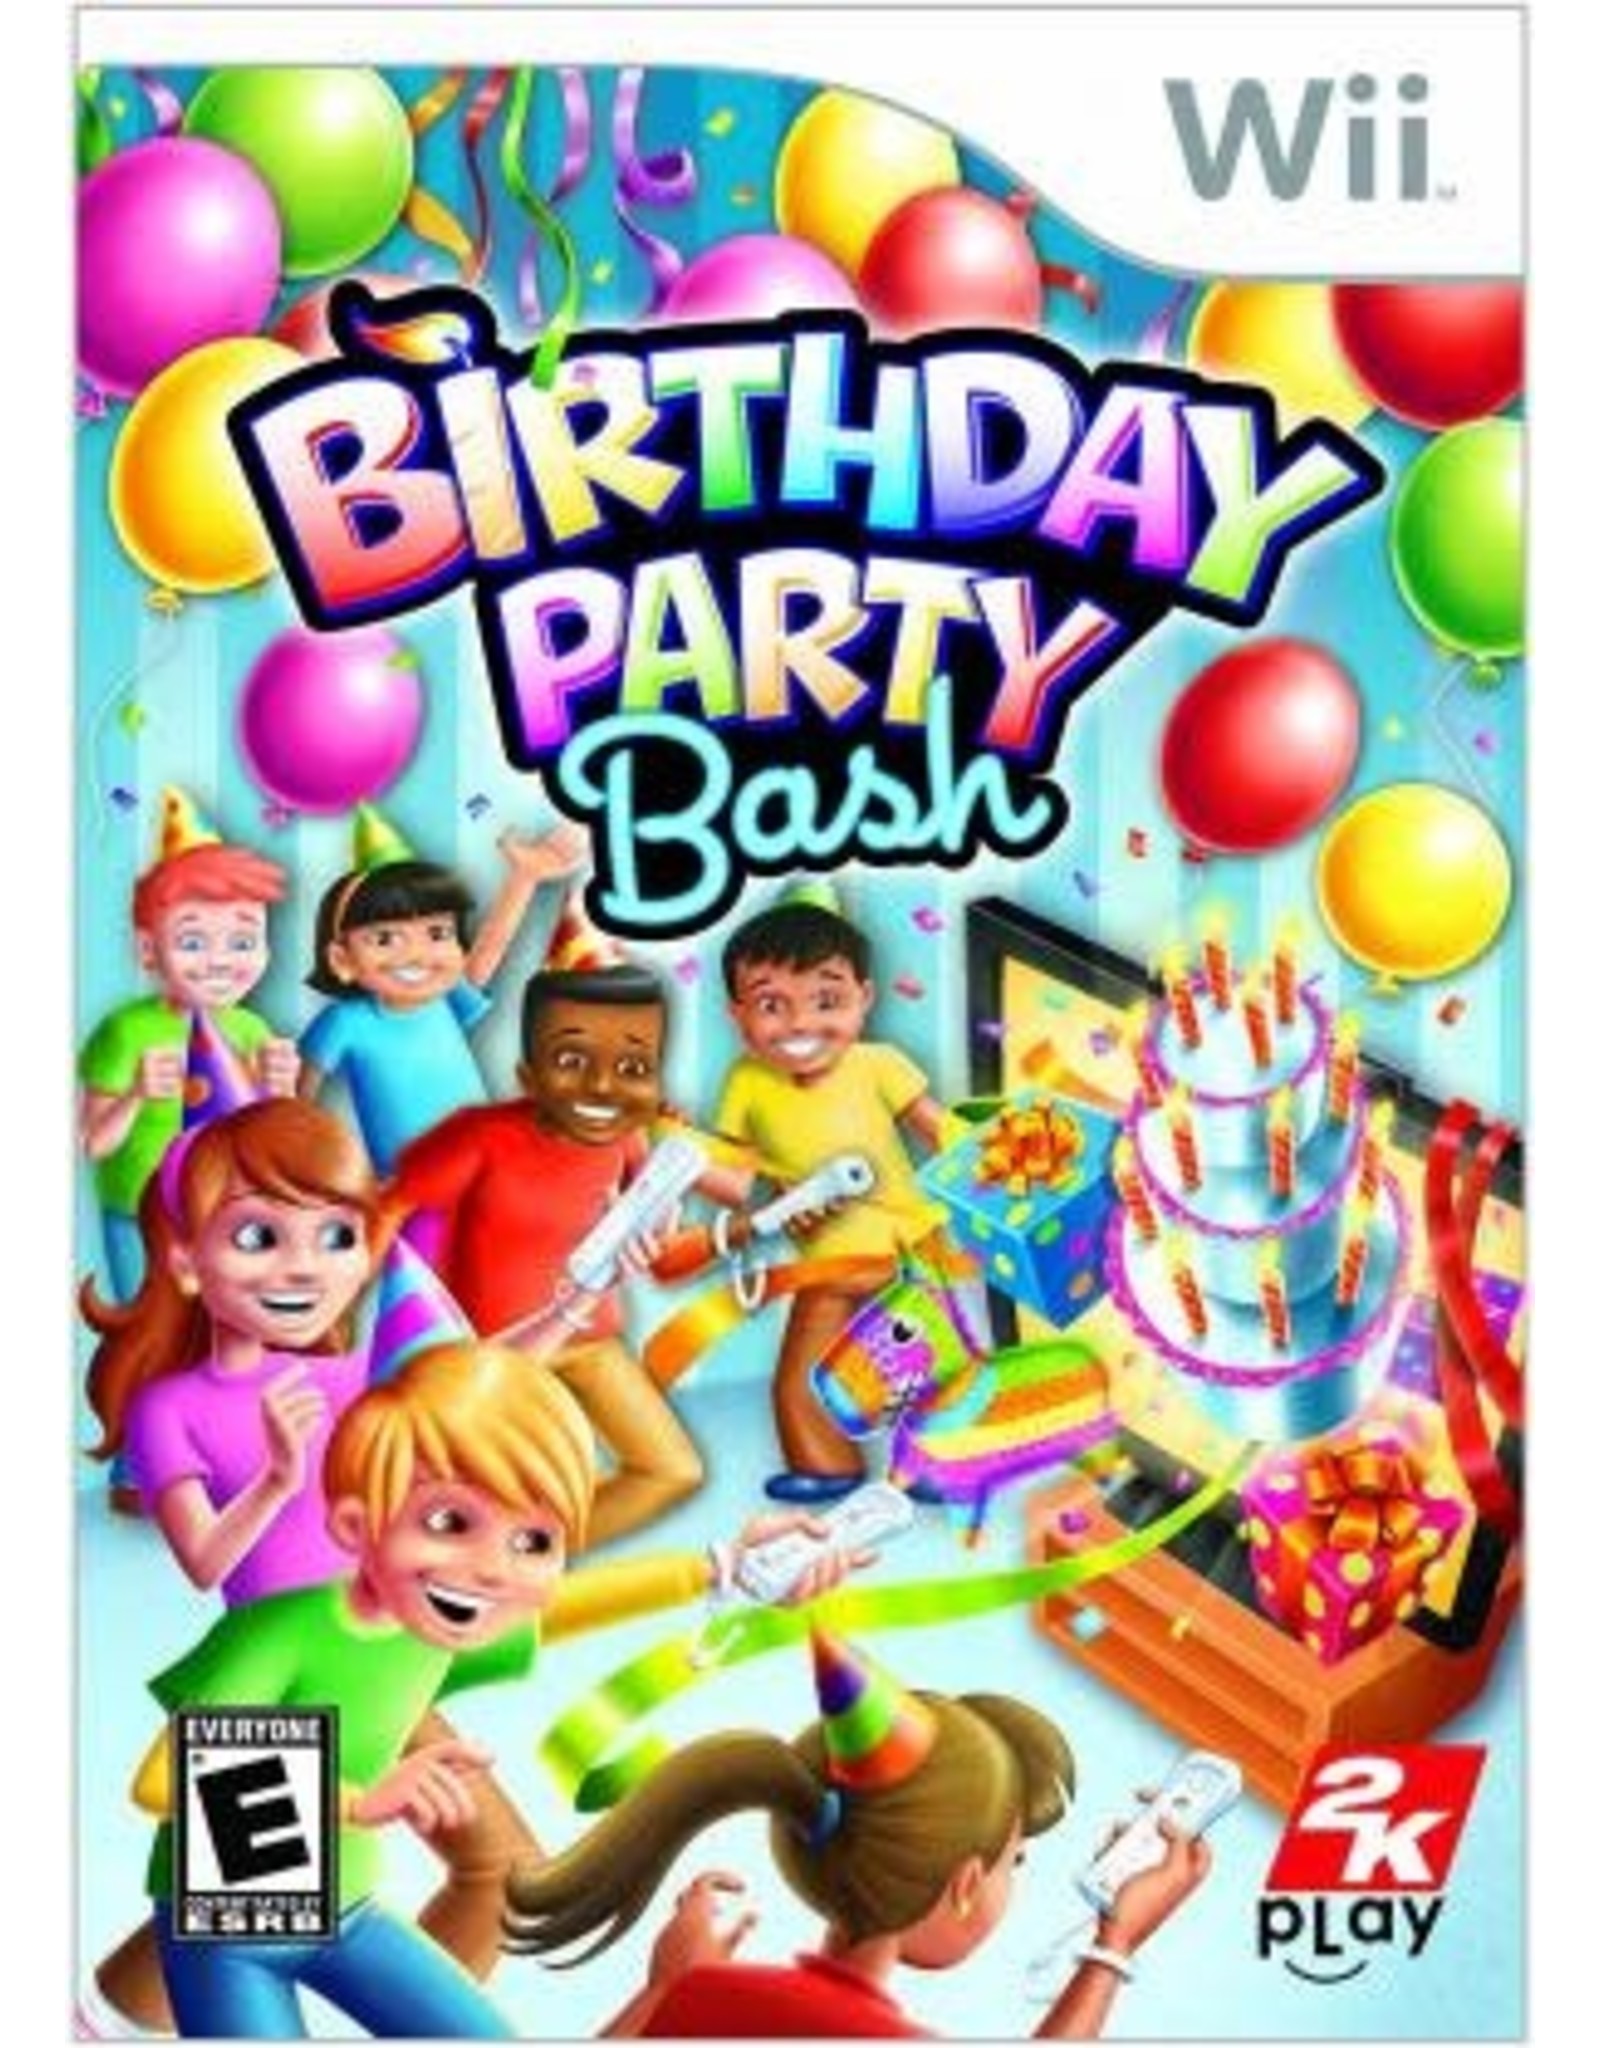 Wii Birthday Party Bash (CIB, Water Damaged Sleeve)